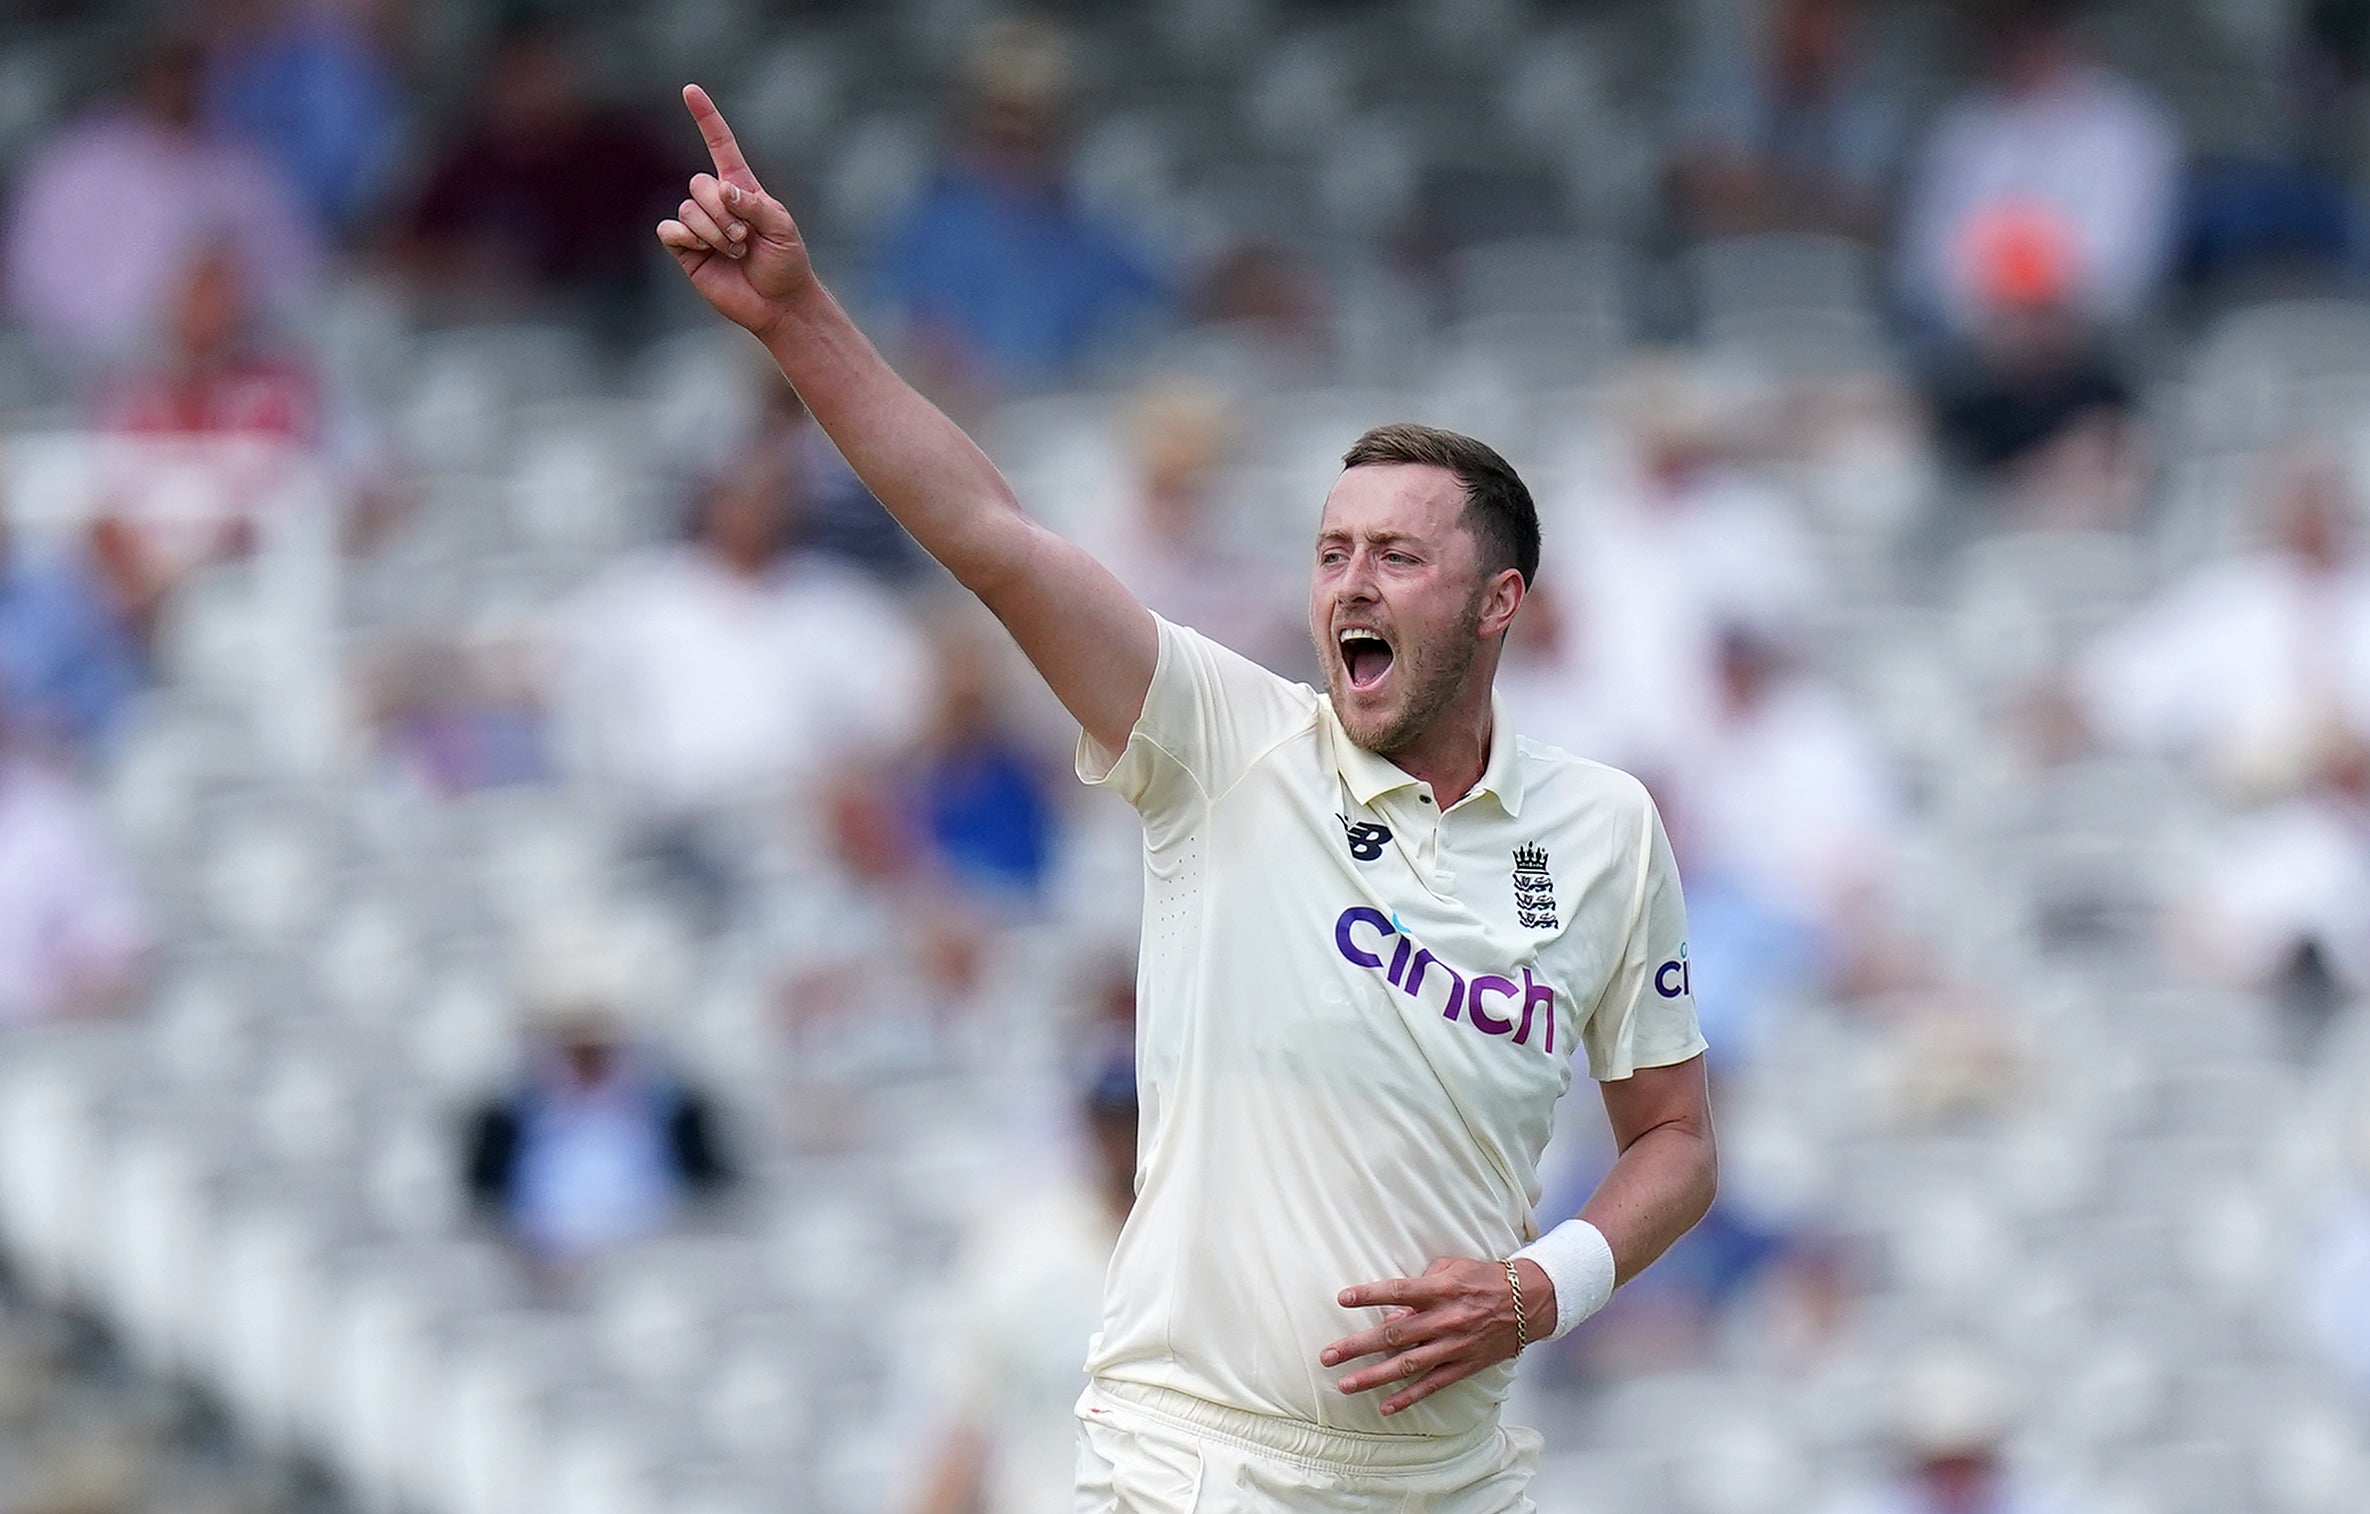 Ollie Robinson celebrates a wicket